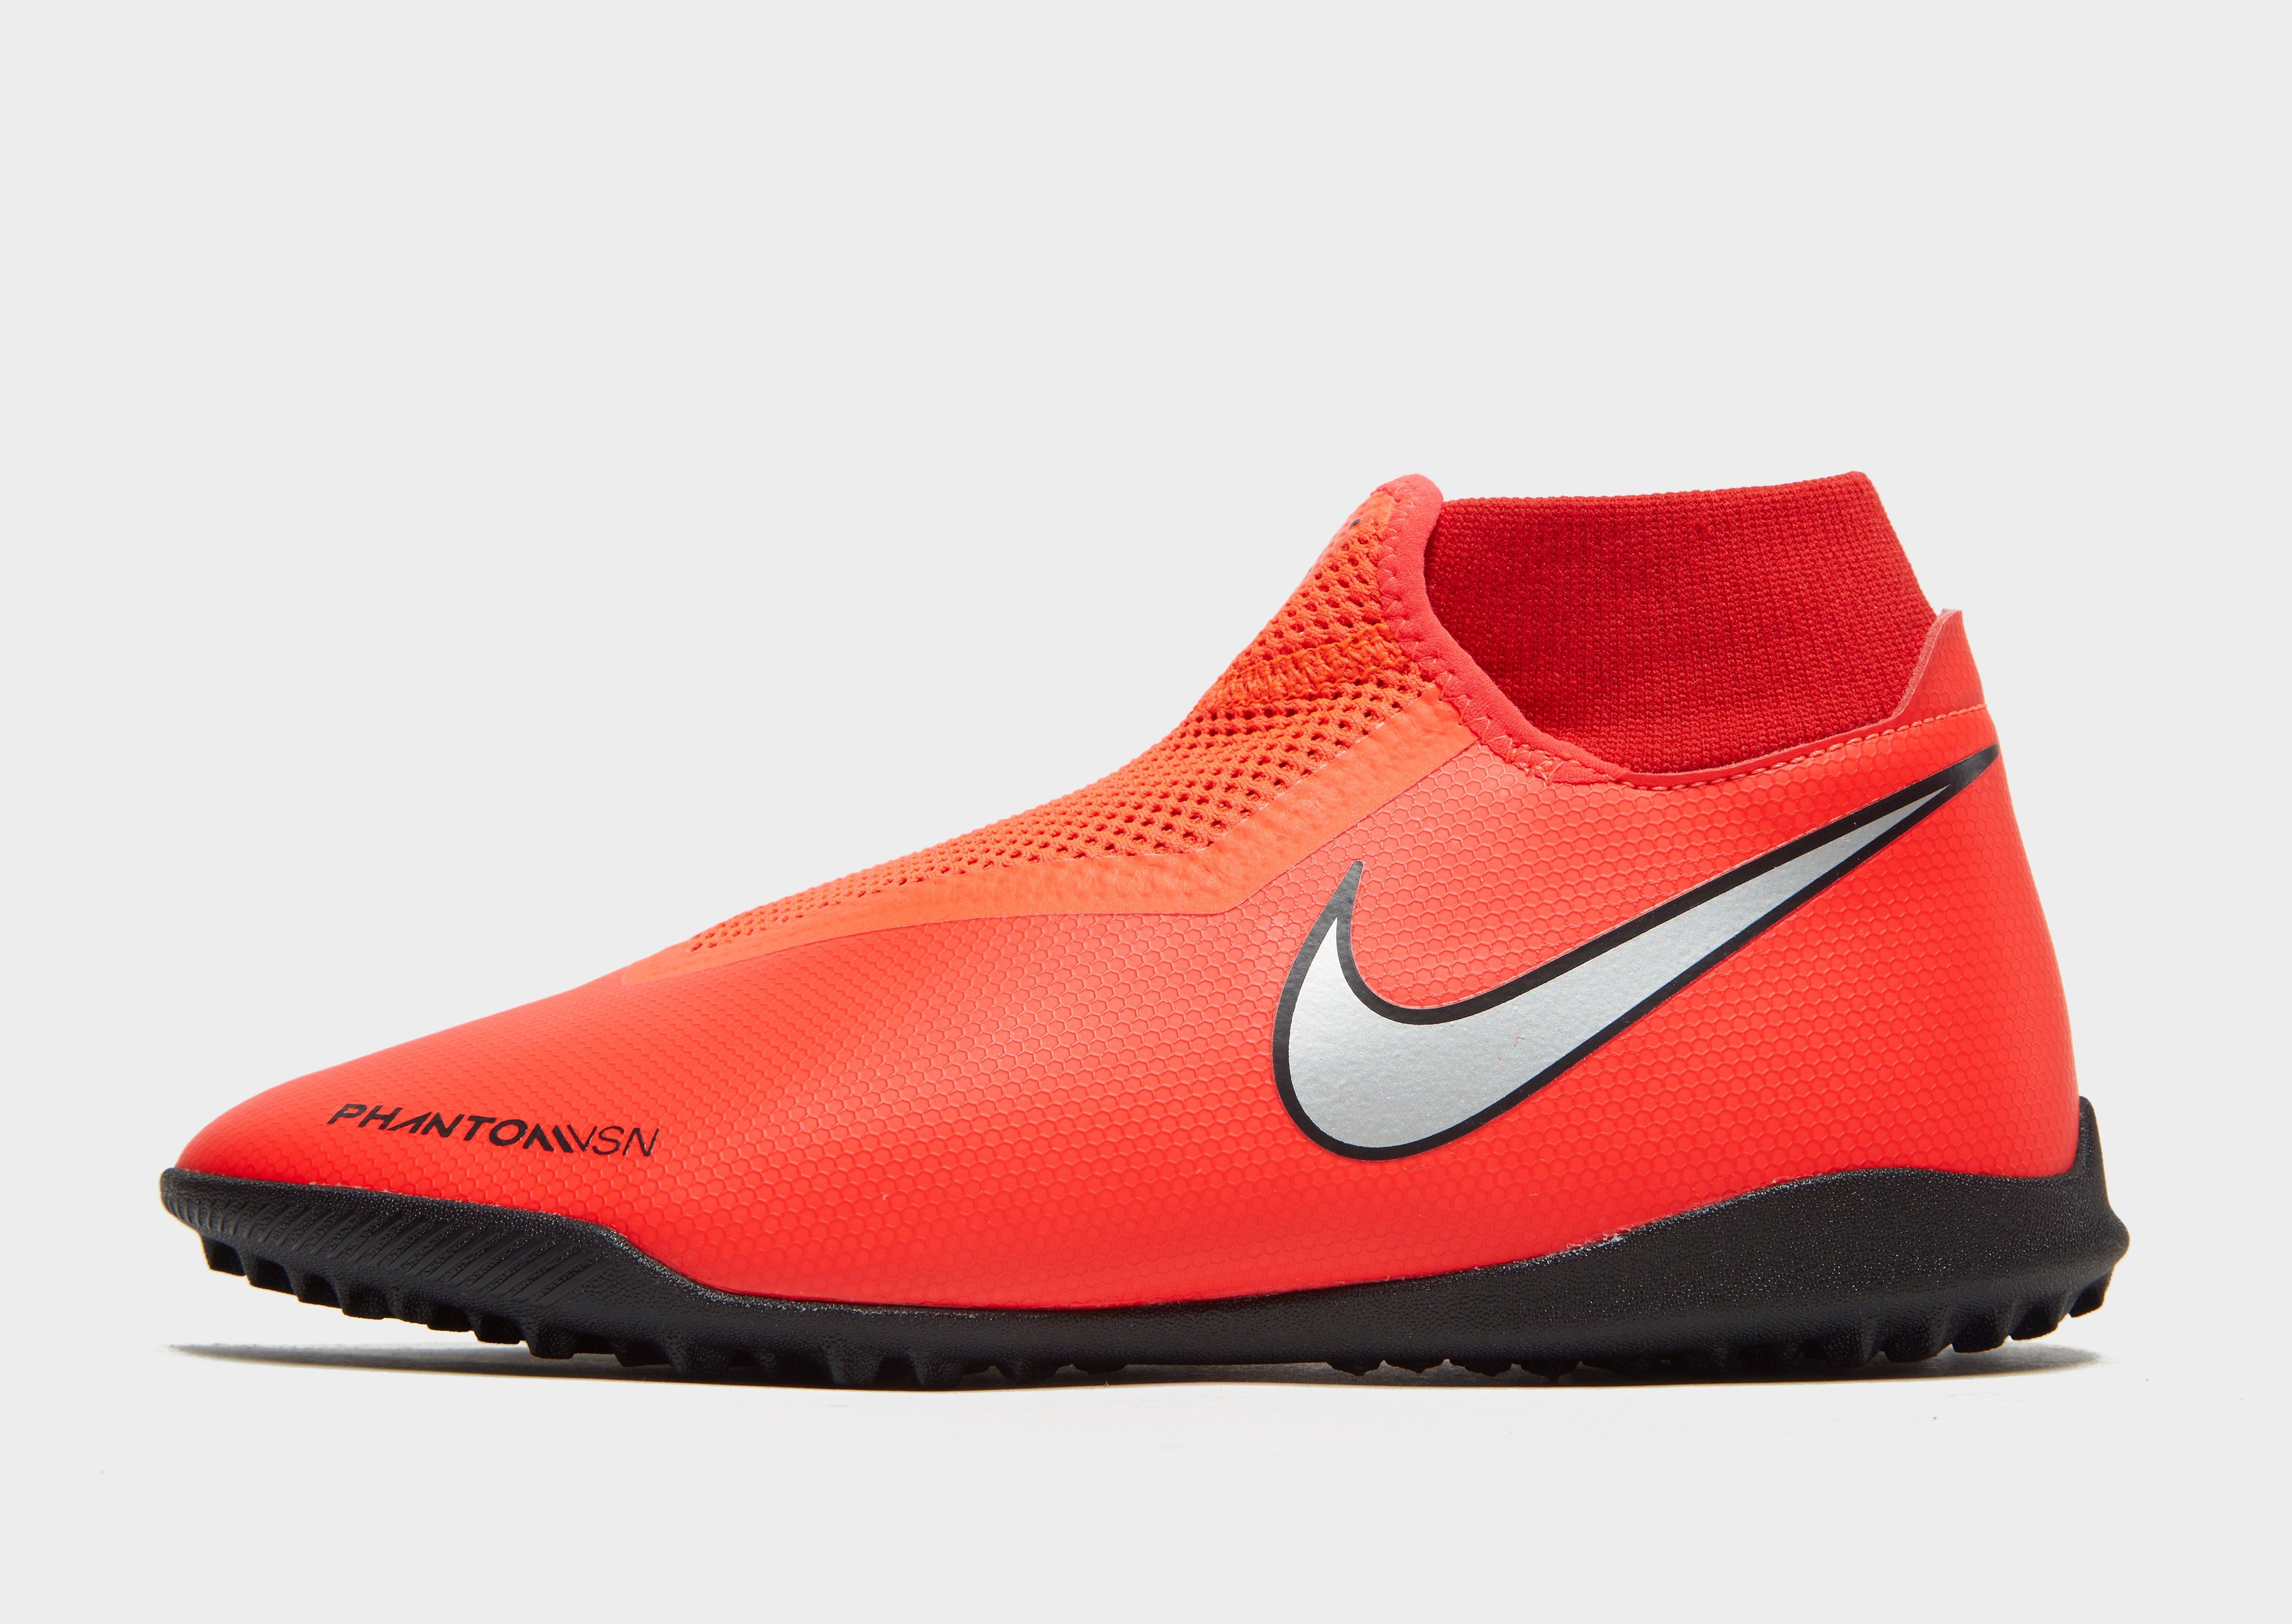  Nike Phantom Volky Football Boots